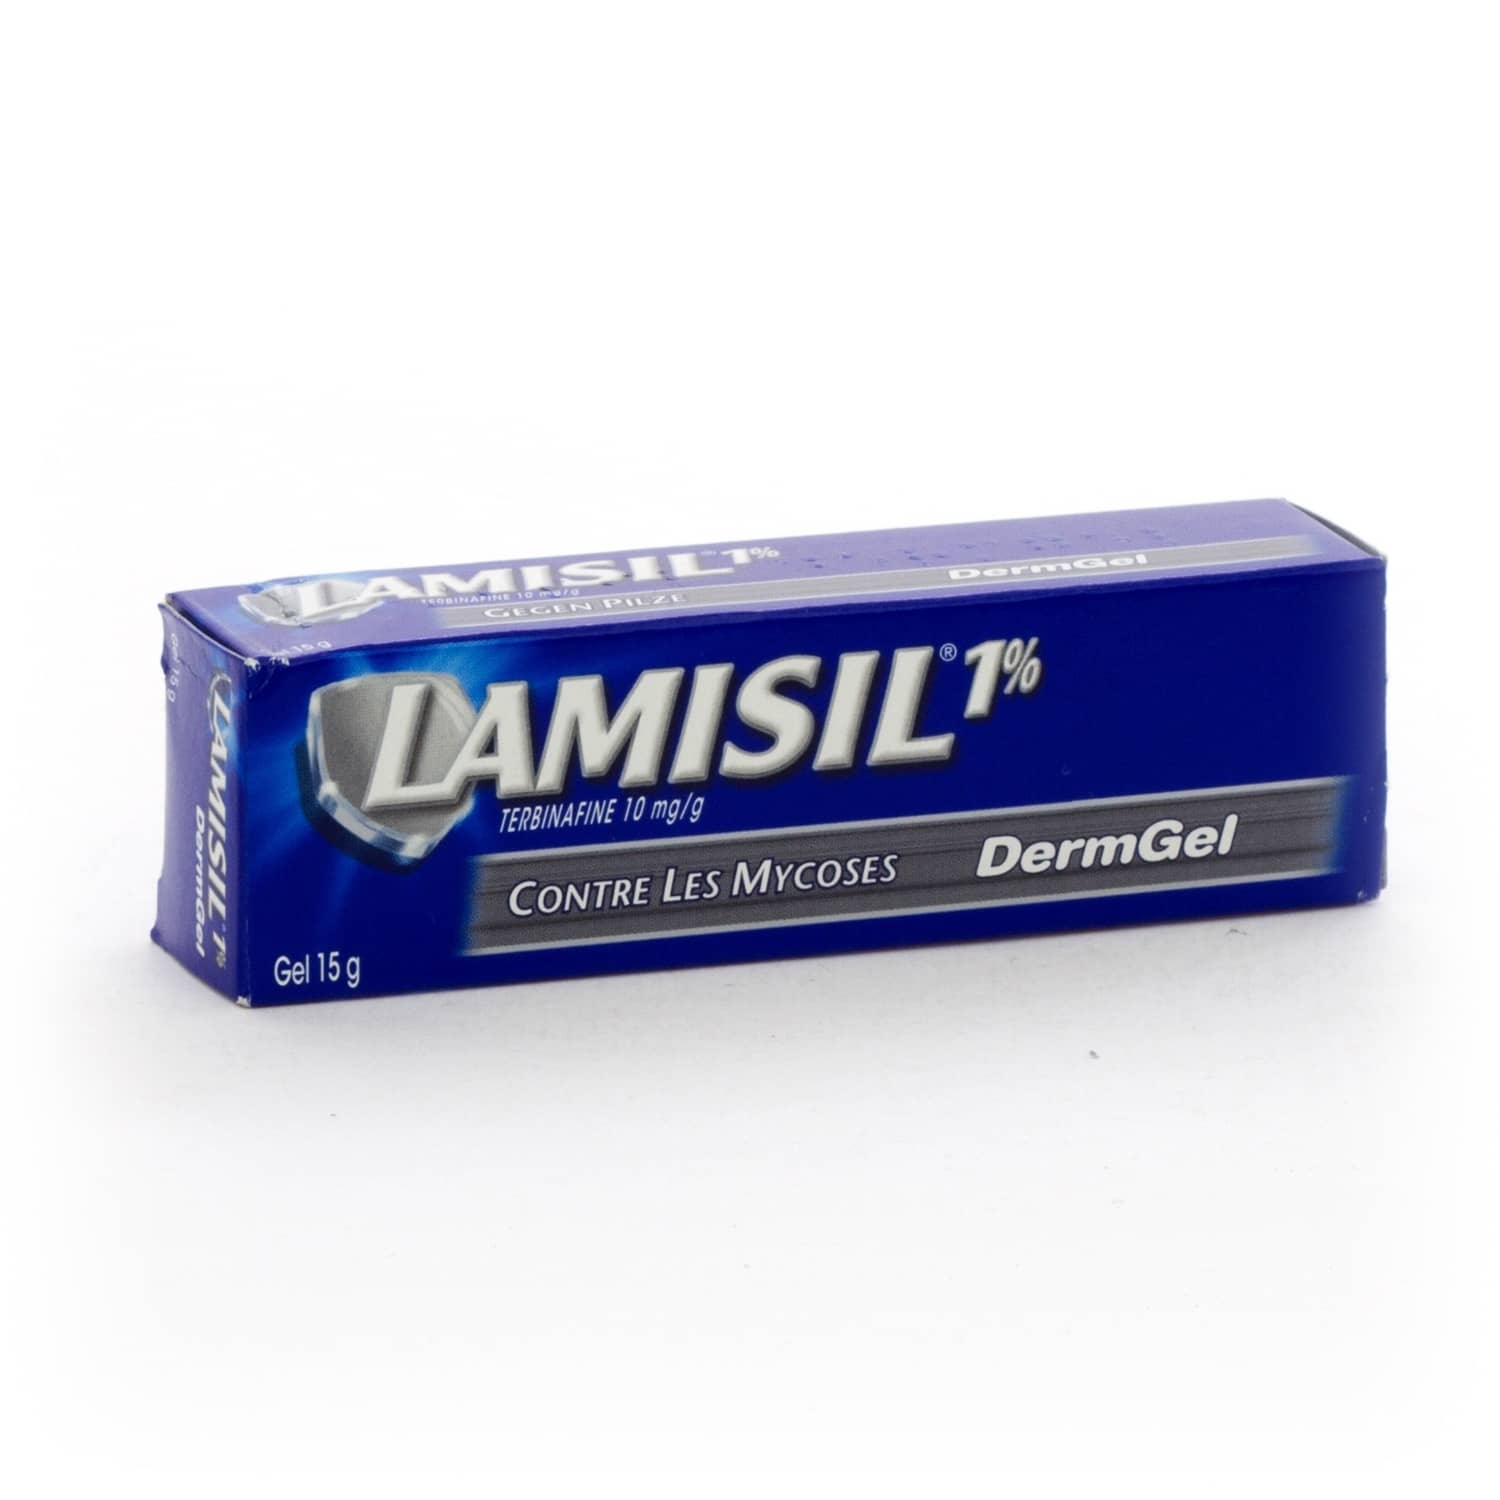 Lamisil 1% DermGel